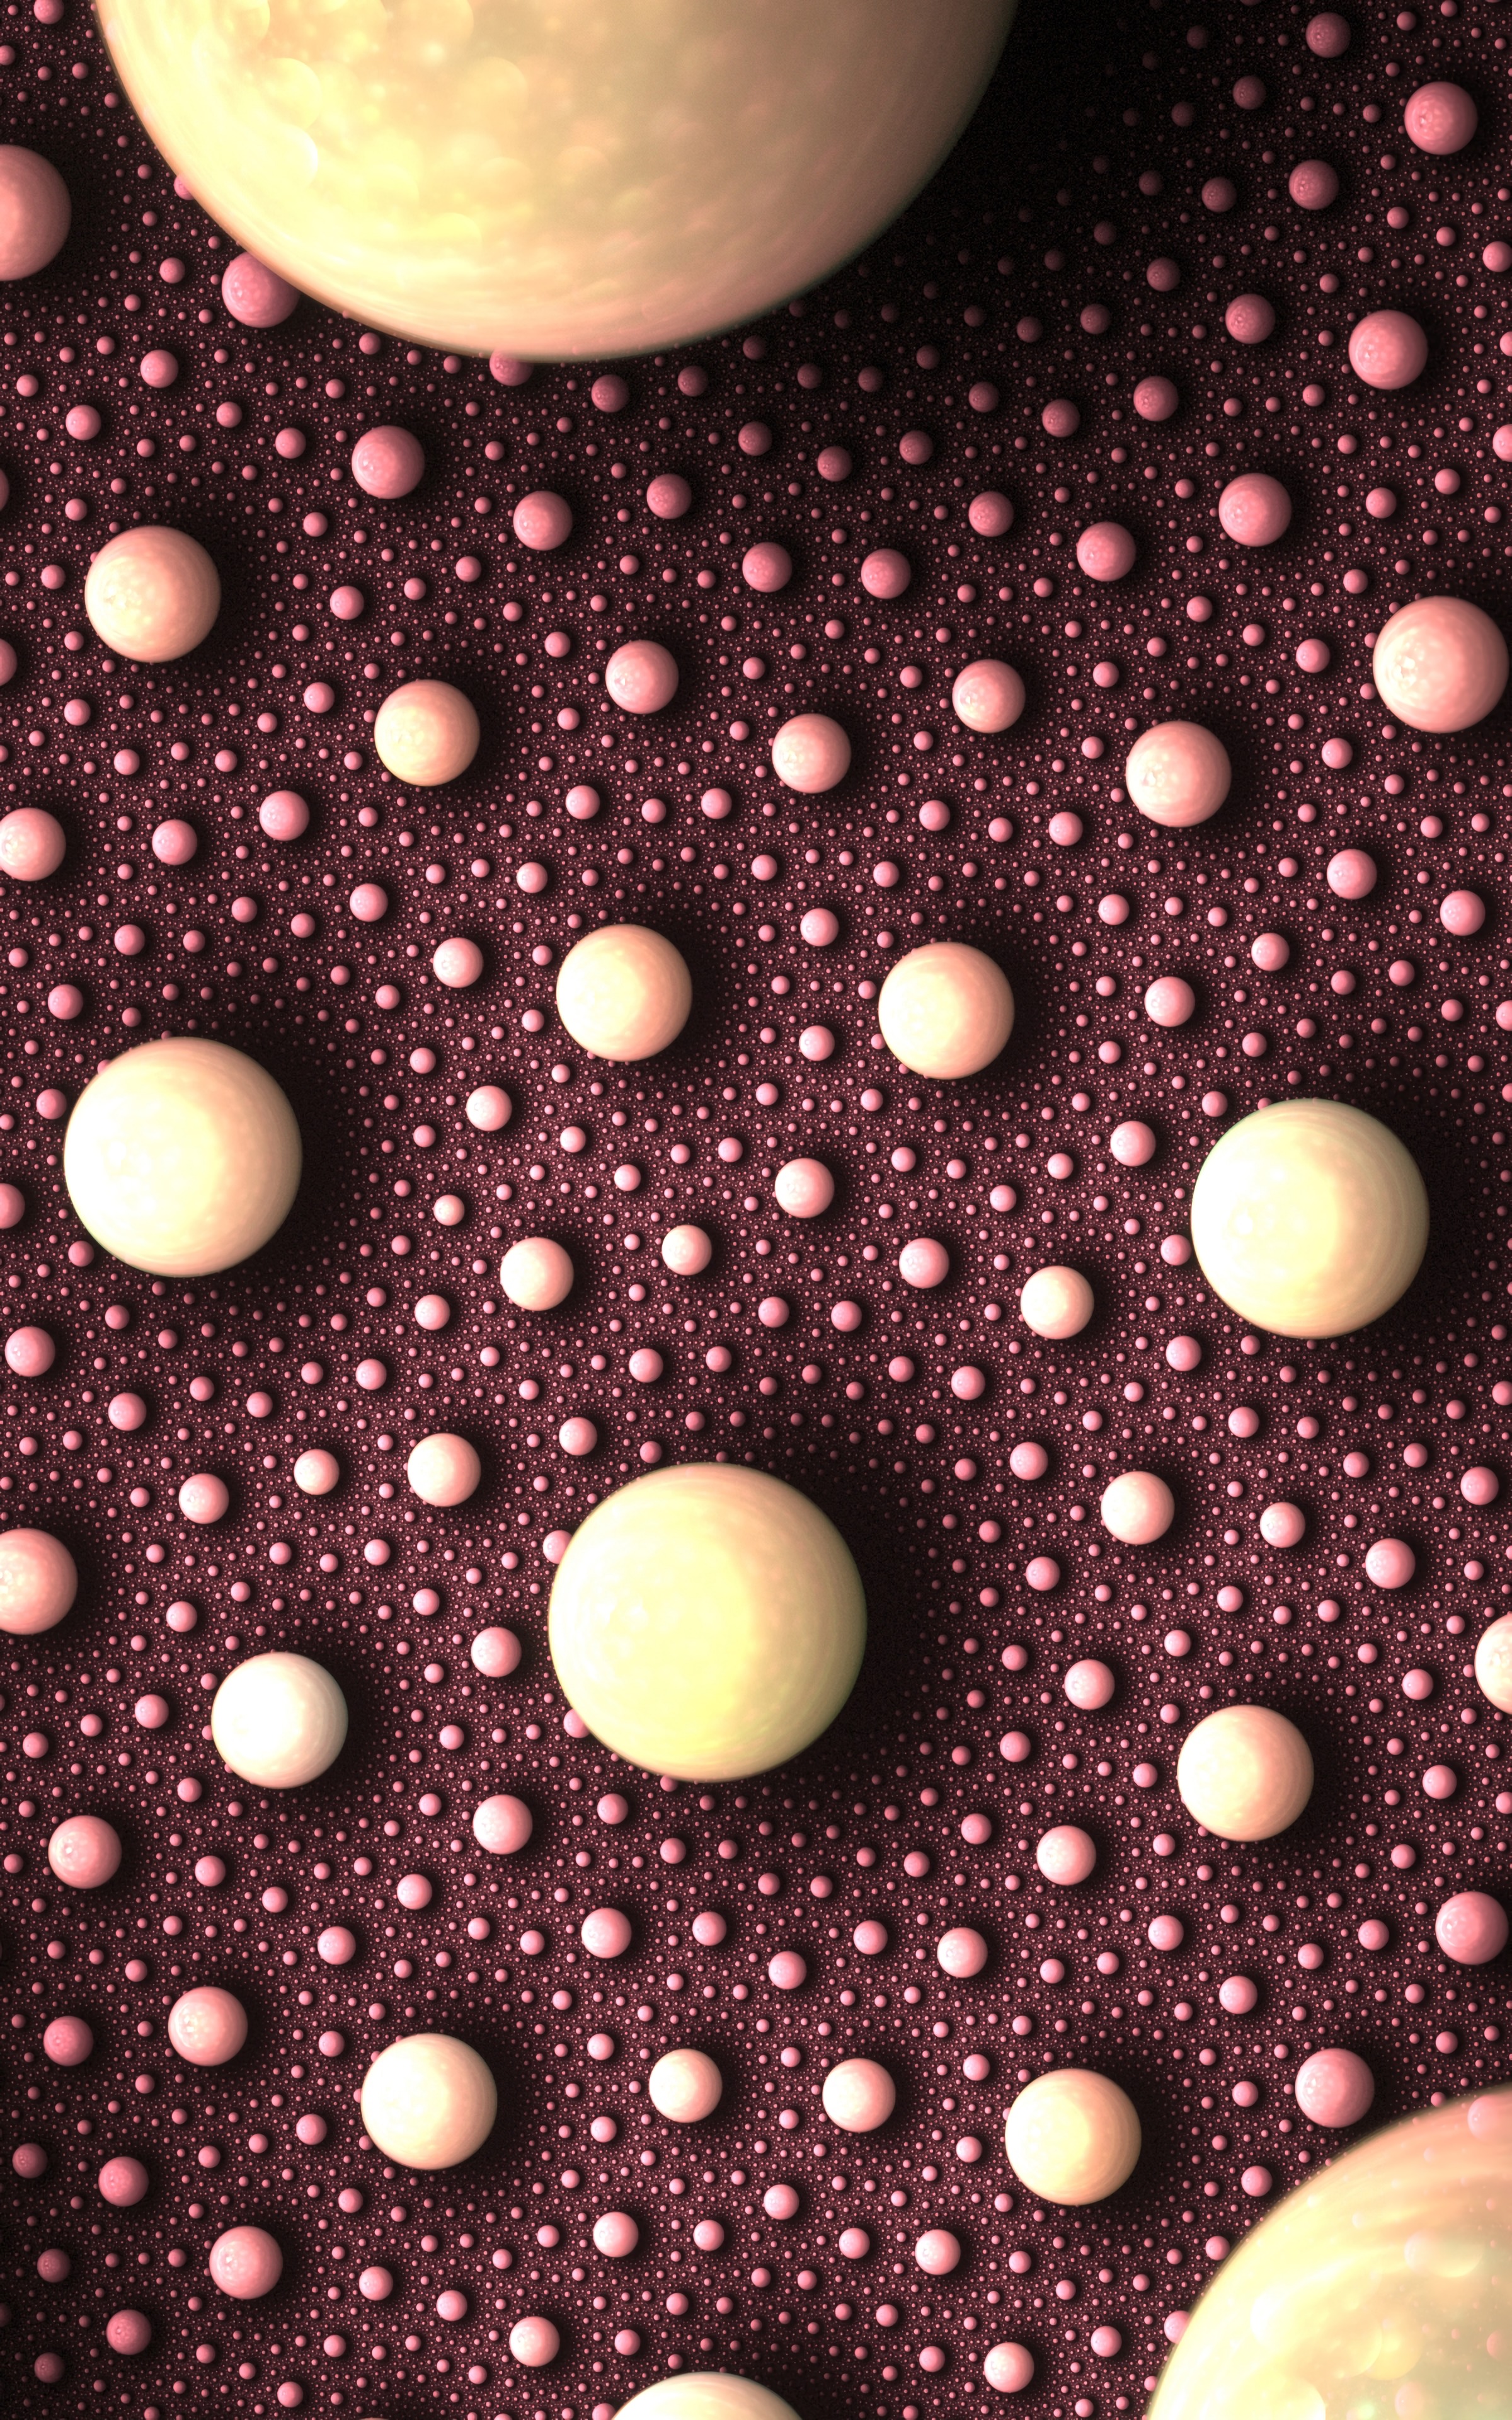 Spheres surface, fractal, circles, sphere 8k Backgrounds